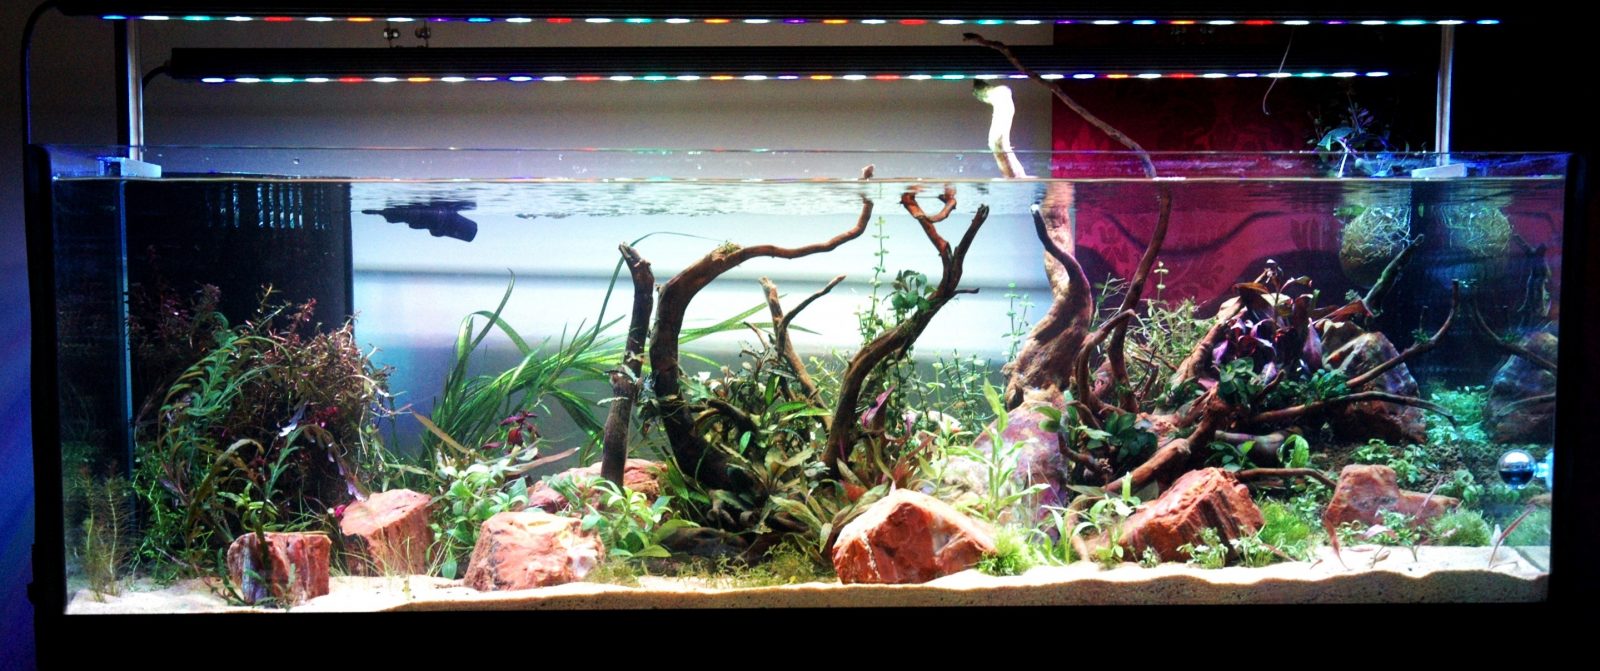 best freshwater aquarium LED lighting 2020